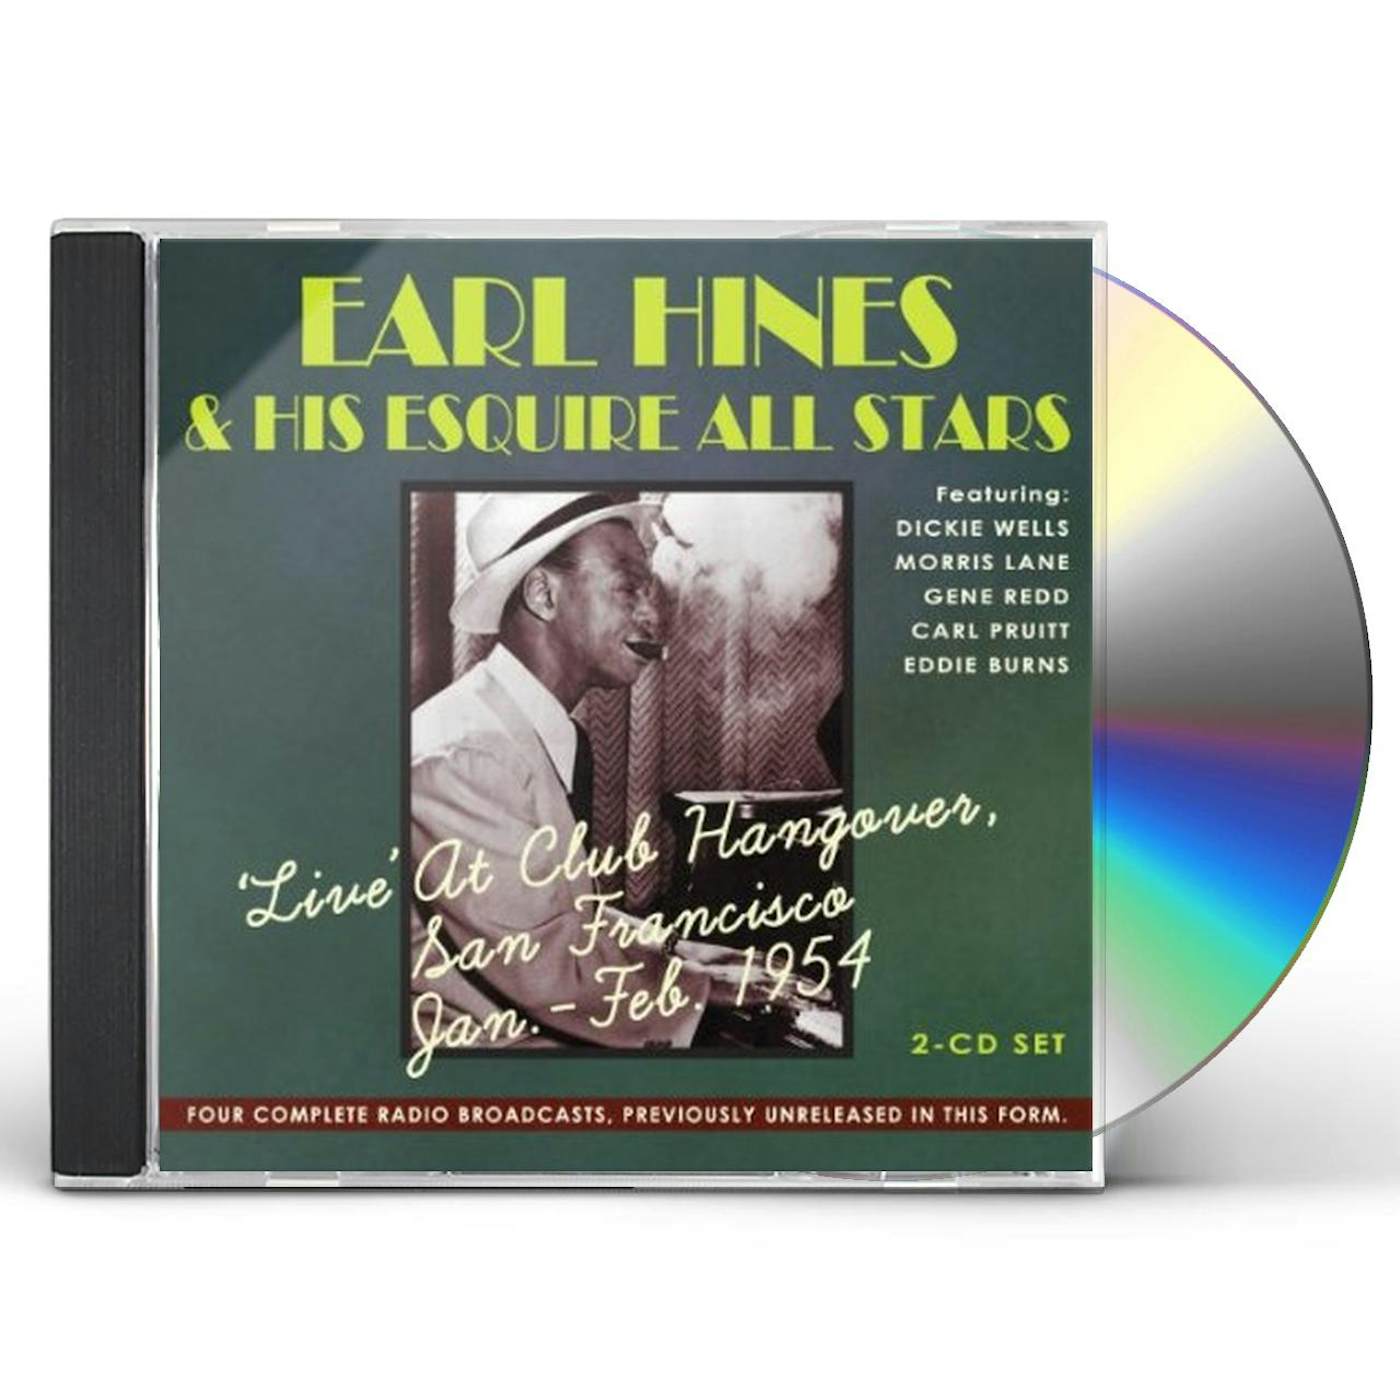 EARL HINES & HISESQUIRE ALL STARS CD